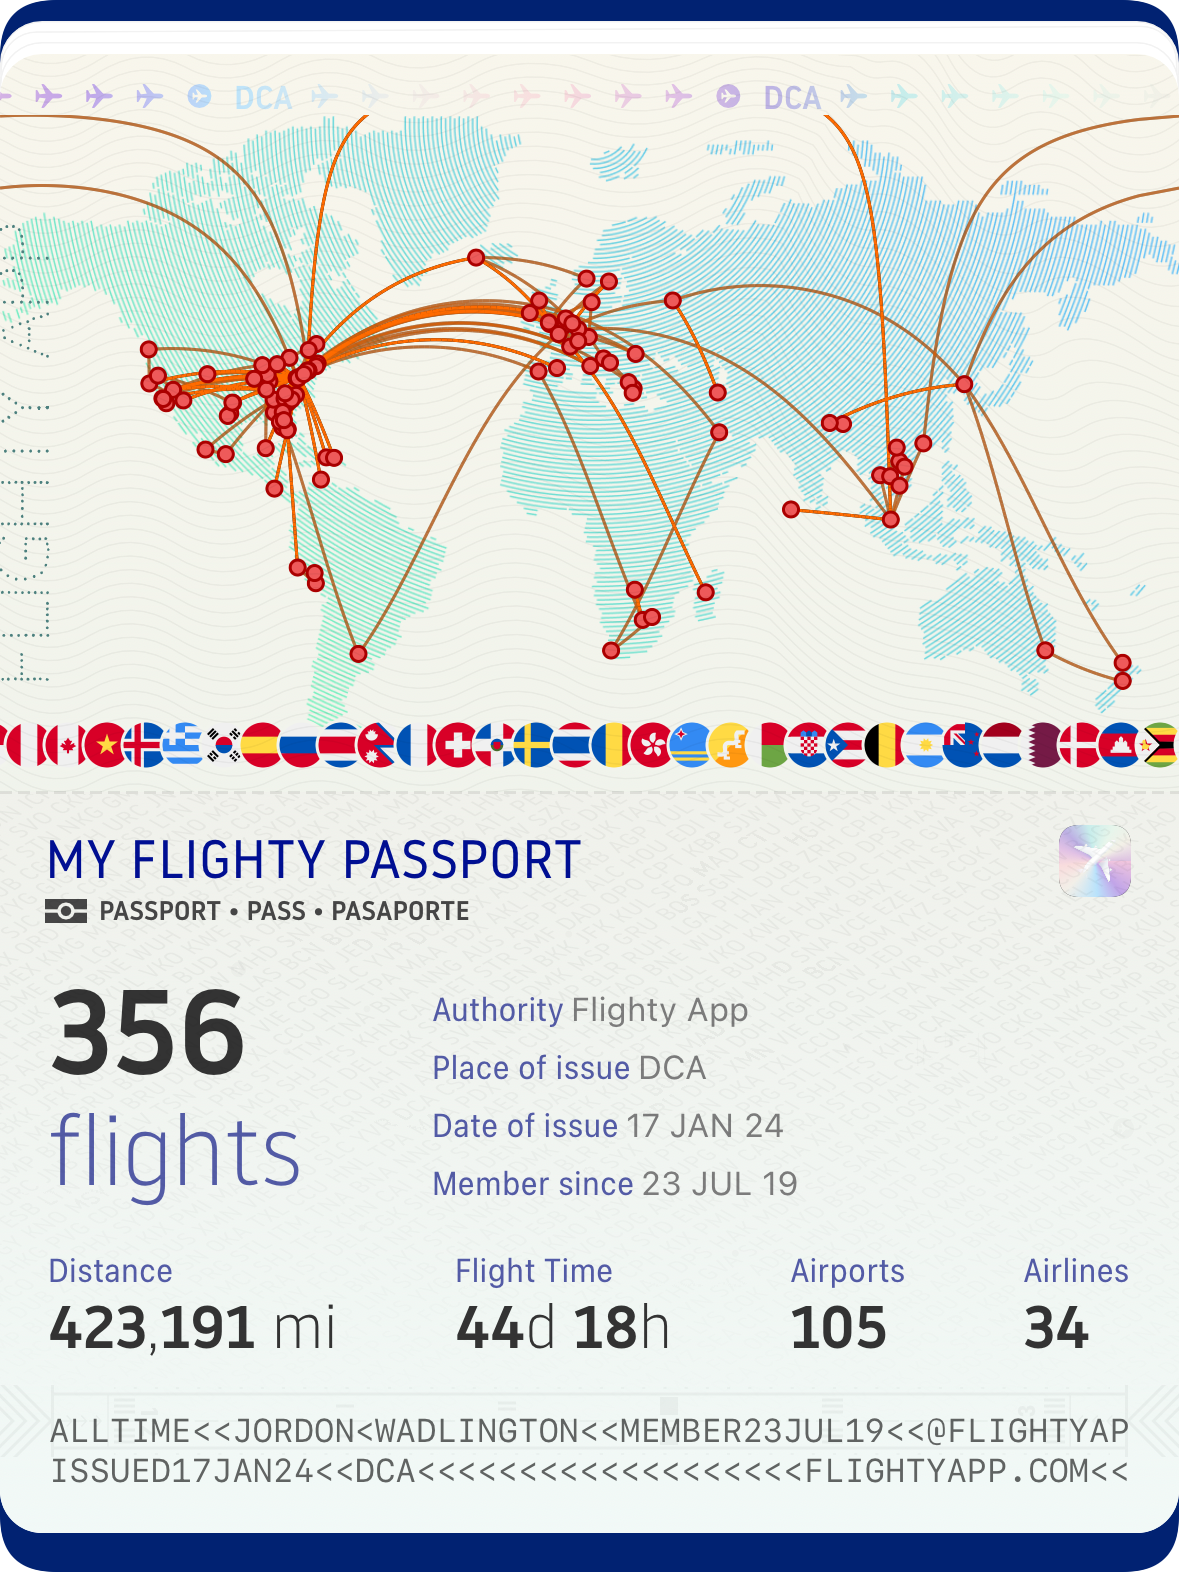 An image of my Flighty passport showing all the flights I've taken since 2010